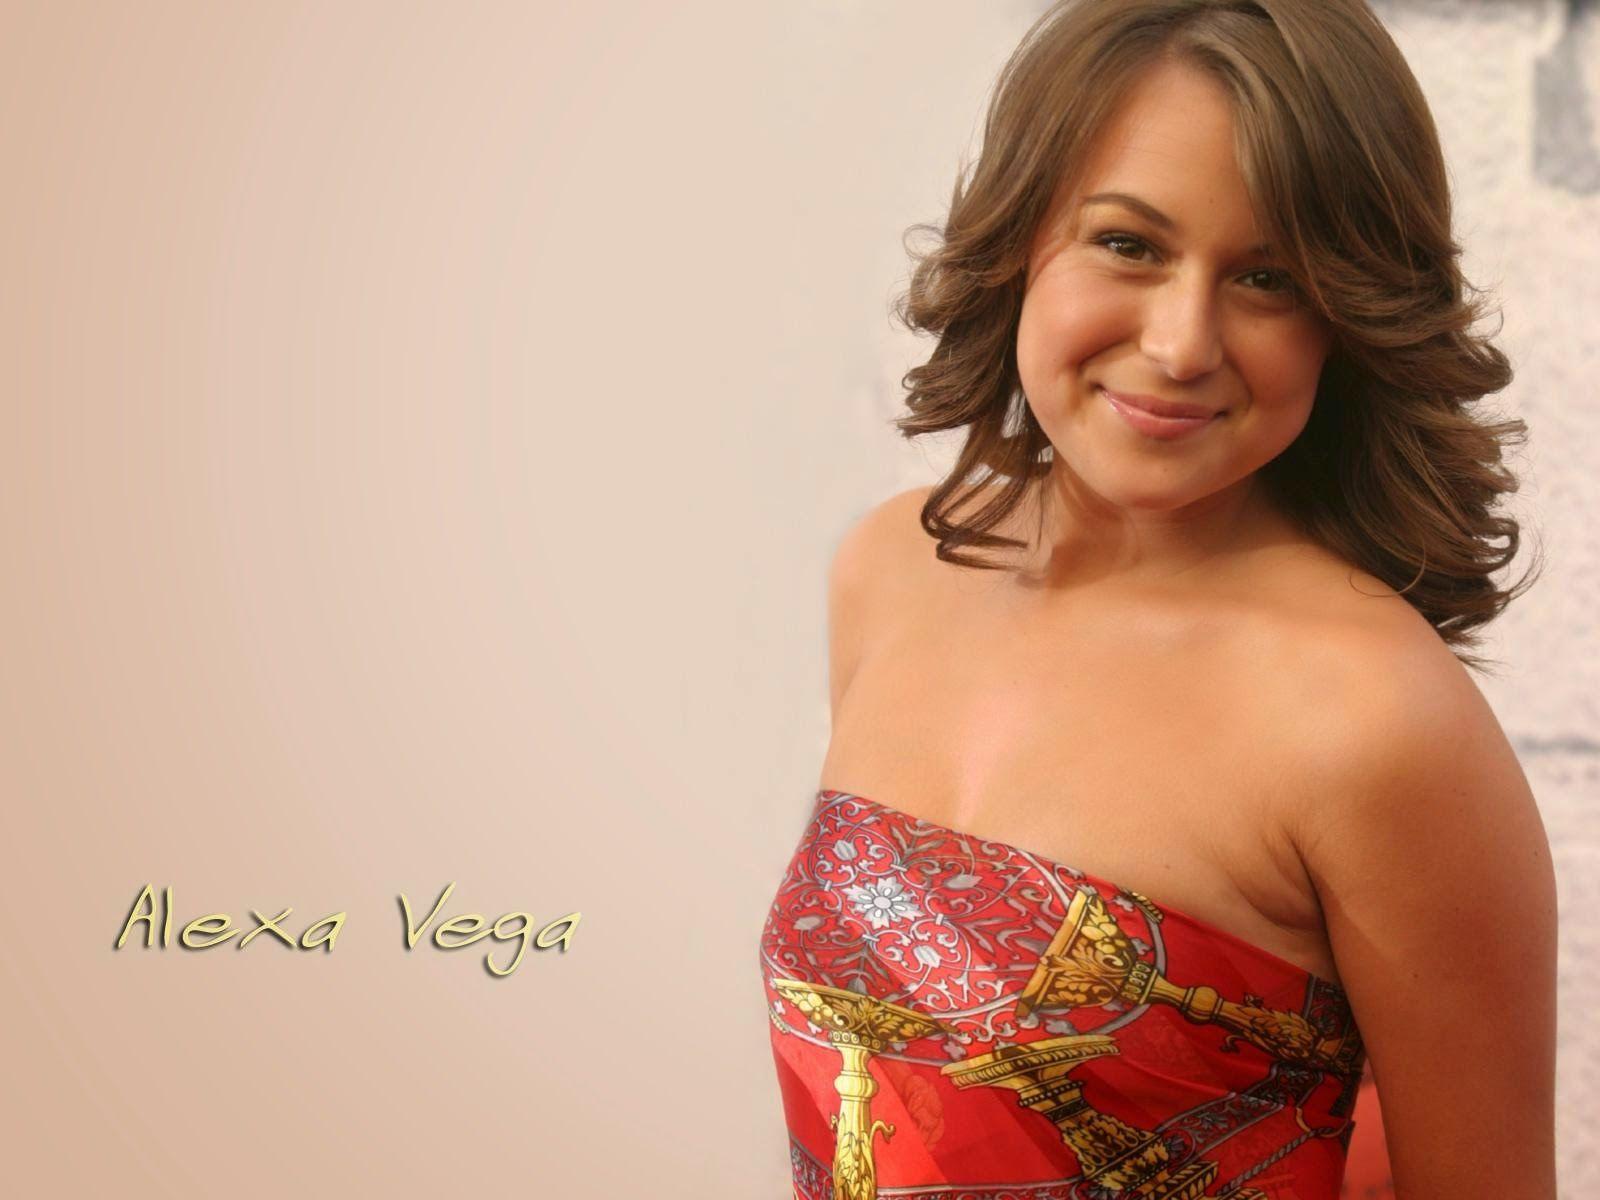 Hollywood Actress Wallpaper: Alexa Vega Wallpaper Free Download